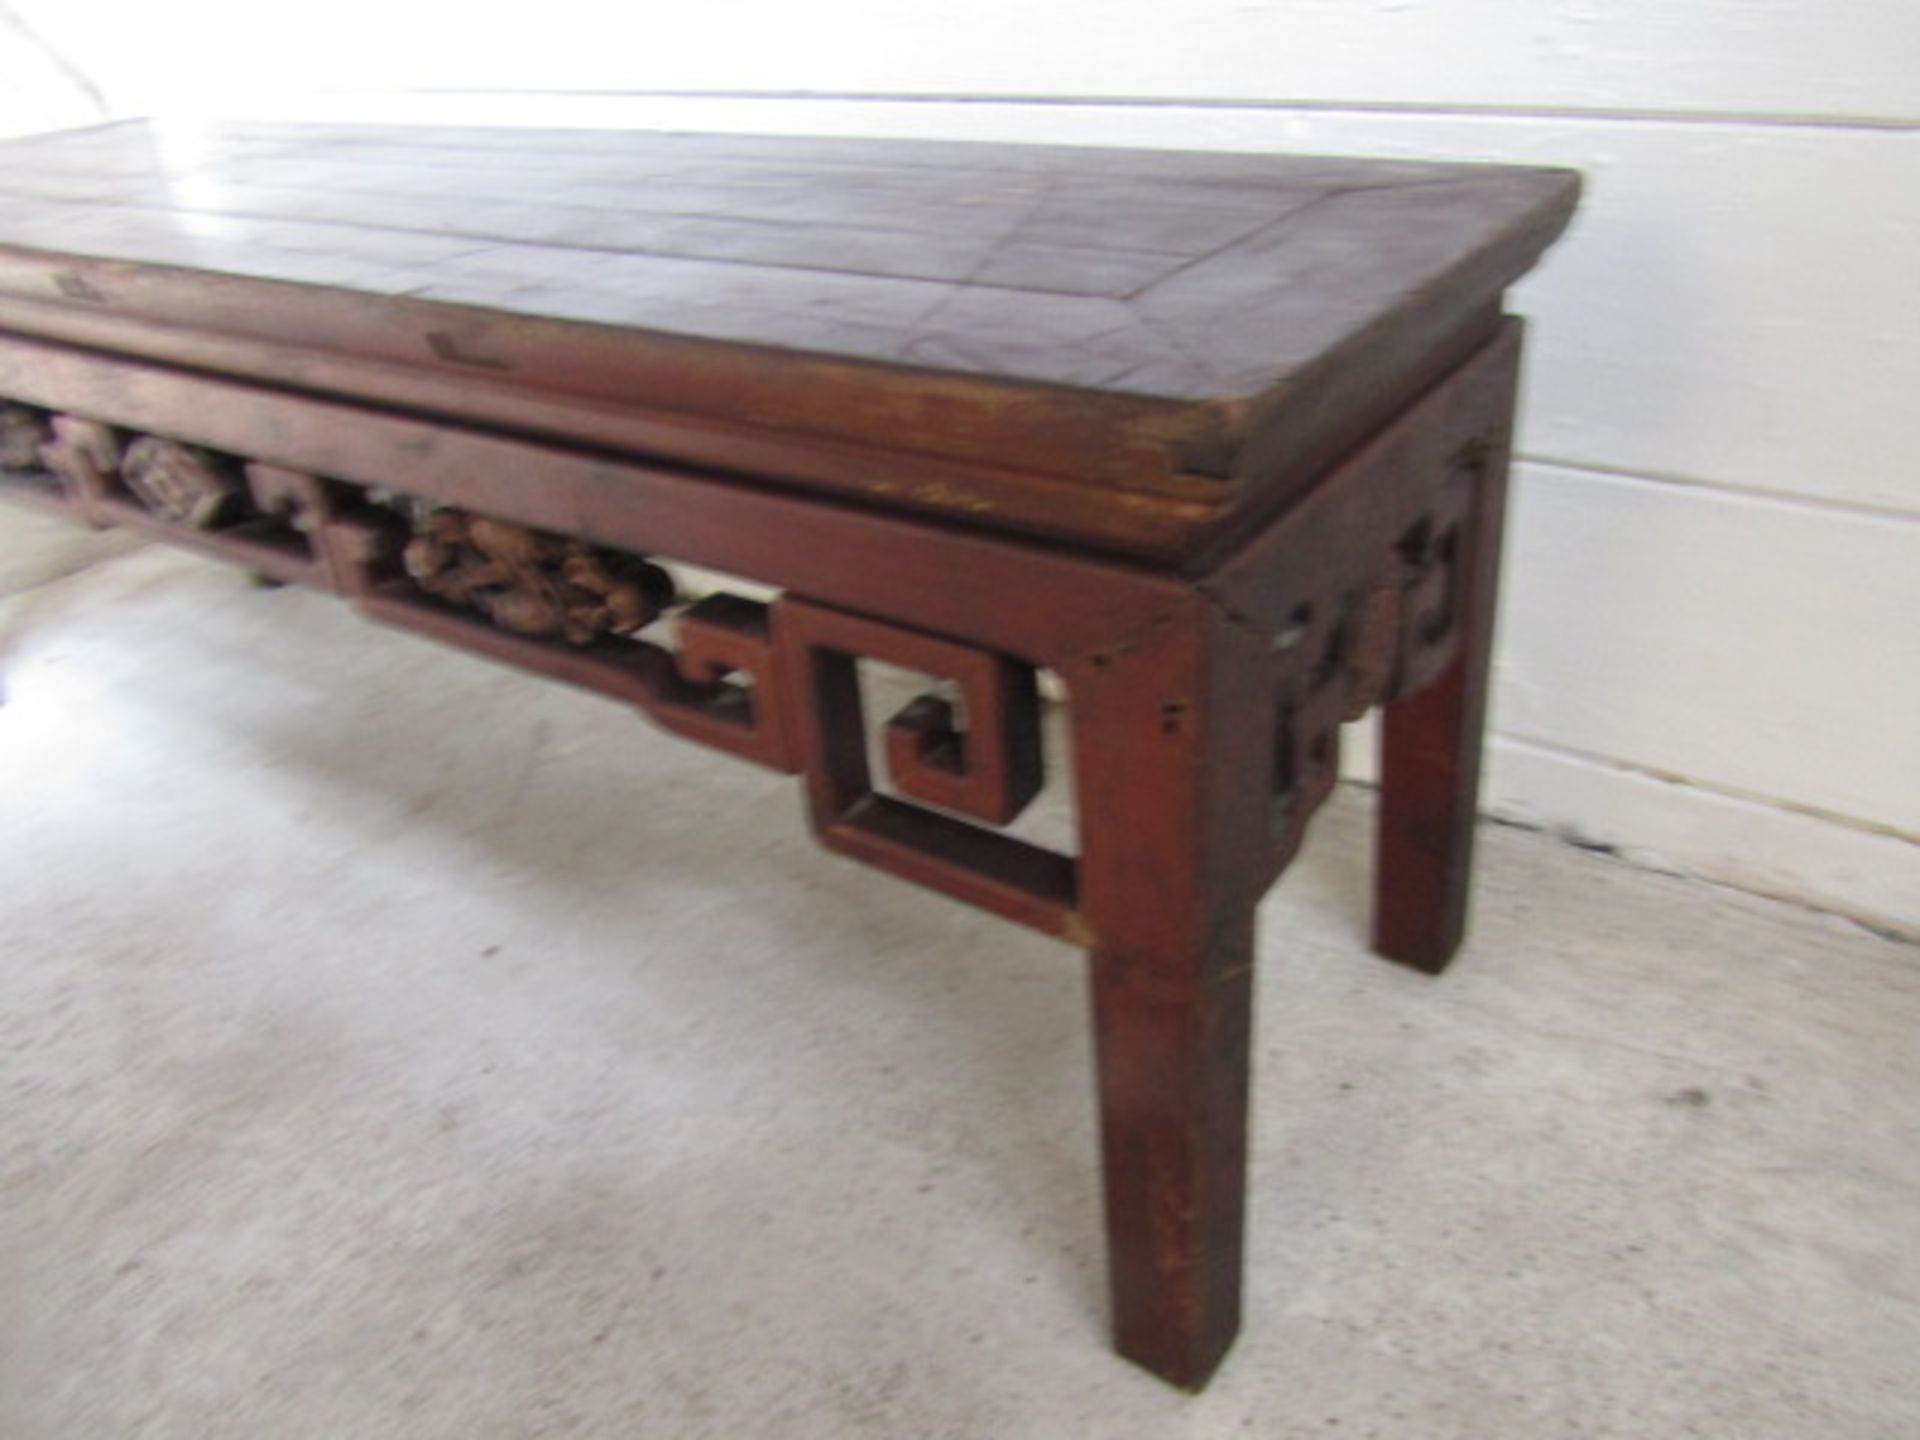 Chinese hardwood bench 112x 33cm 40 cm H - Image 3 of 3